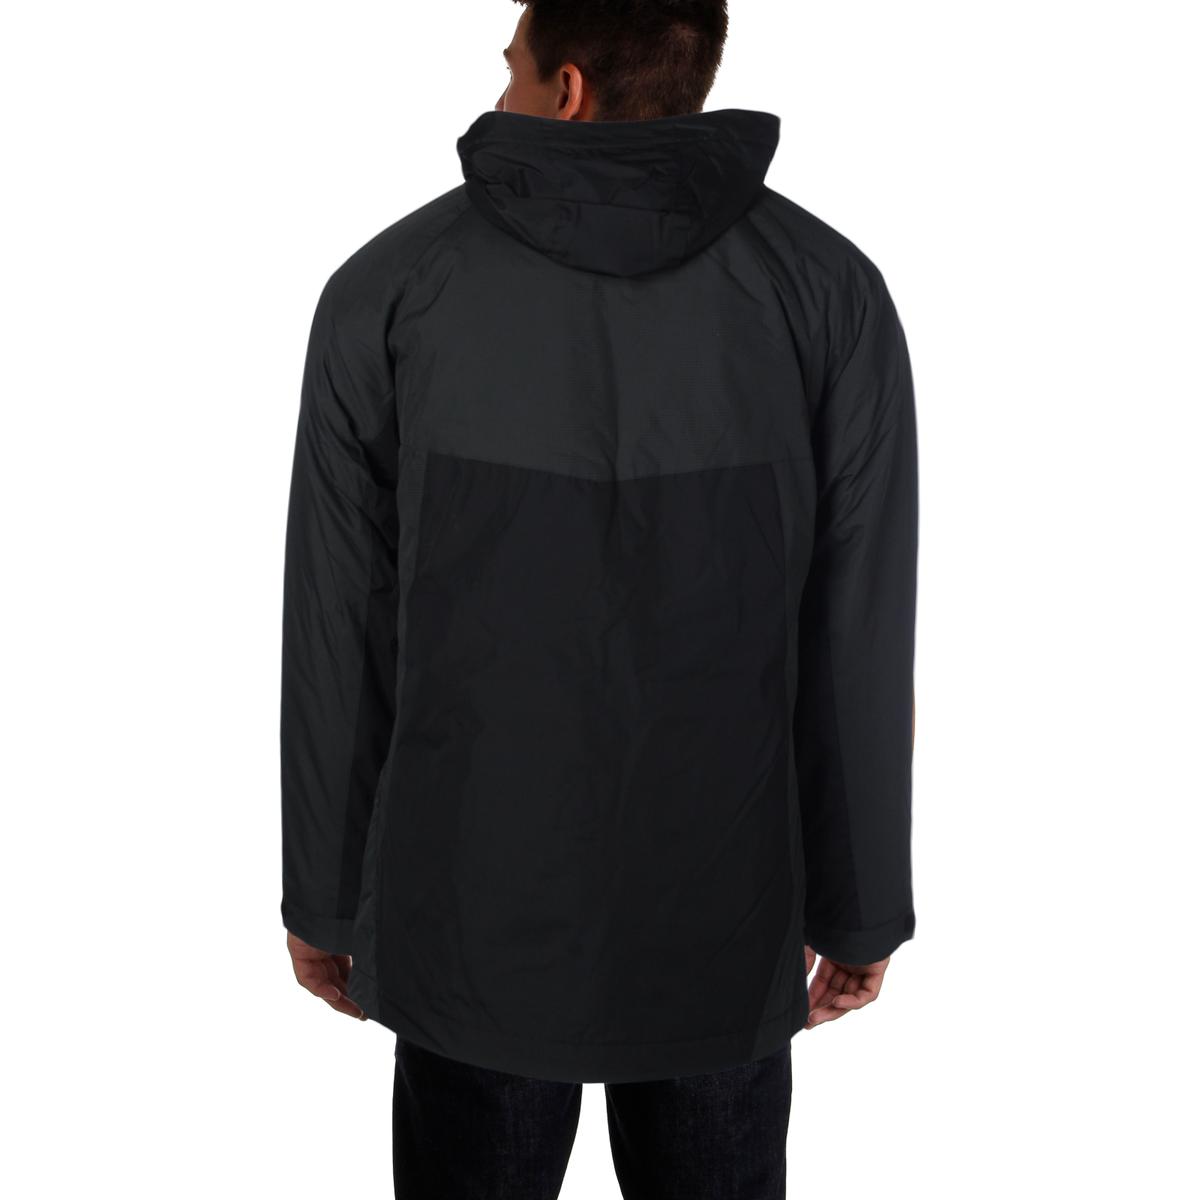 Izod 0163 Mens Systems 3-in-1 Coat Jacket Outerwear BHFO | eBay